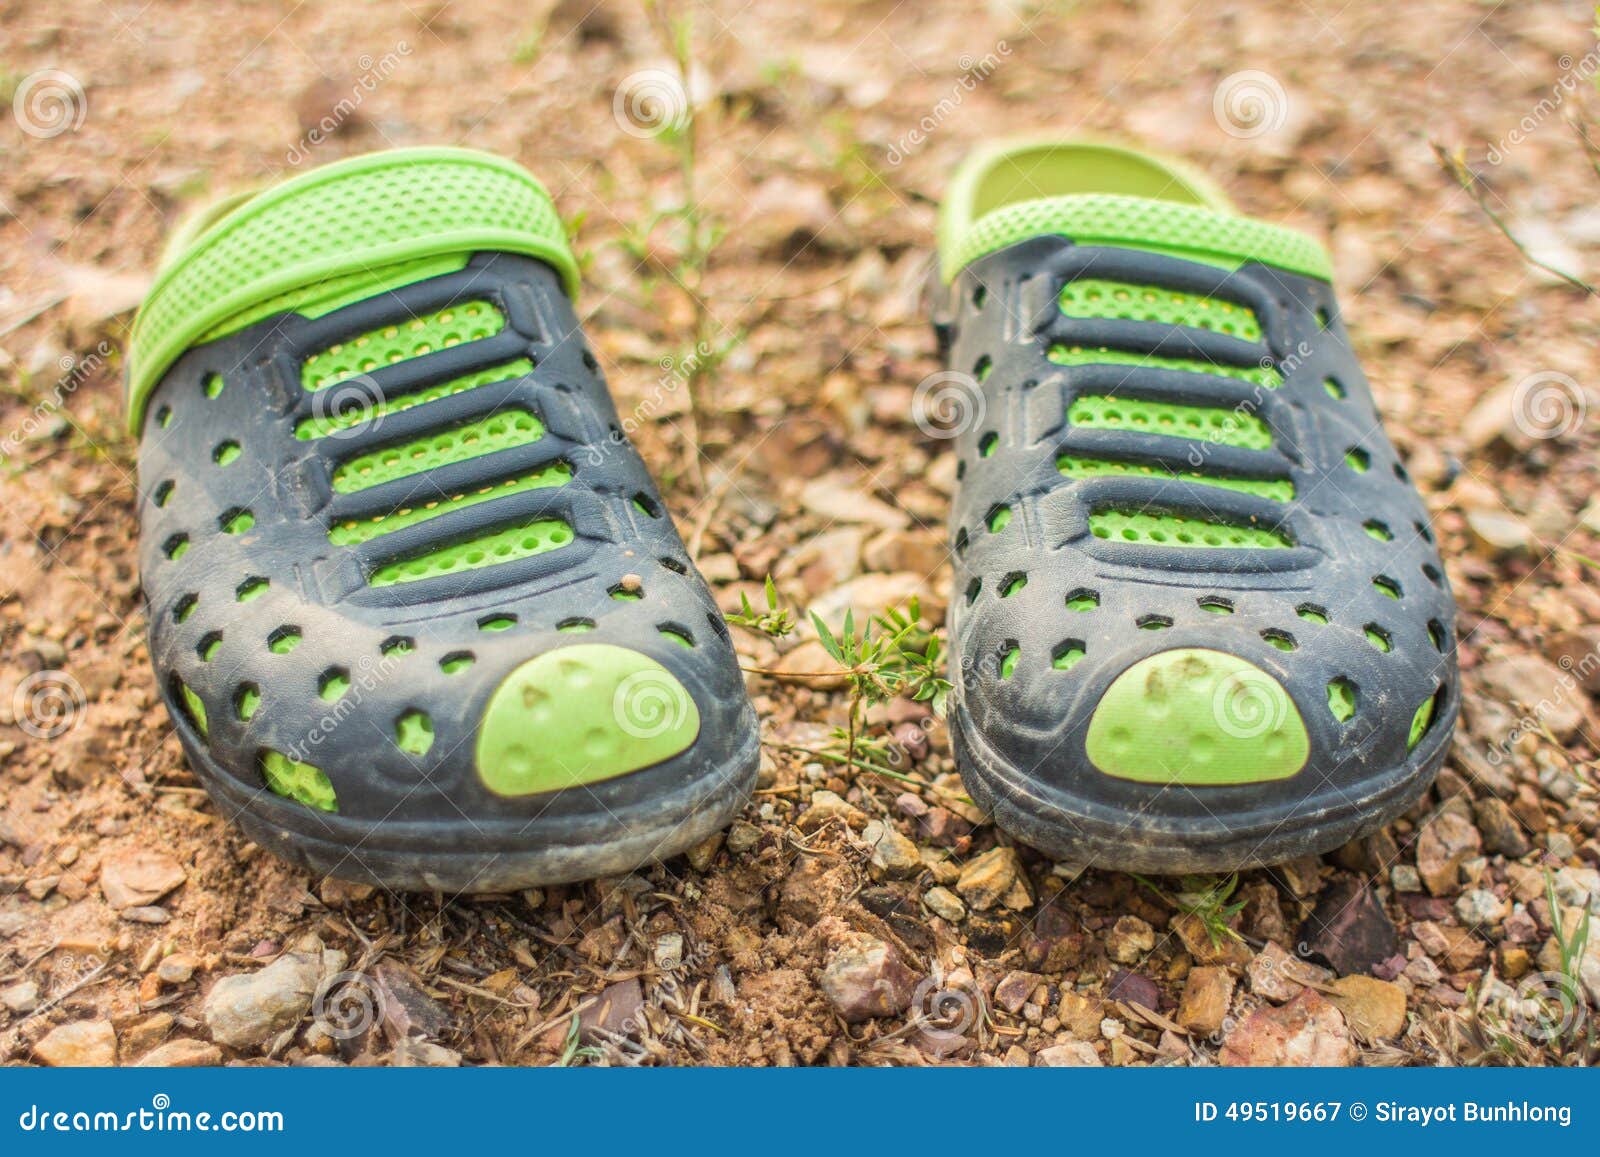 pair green slippers dirty soil scene thailand 49519667